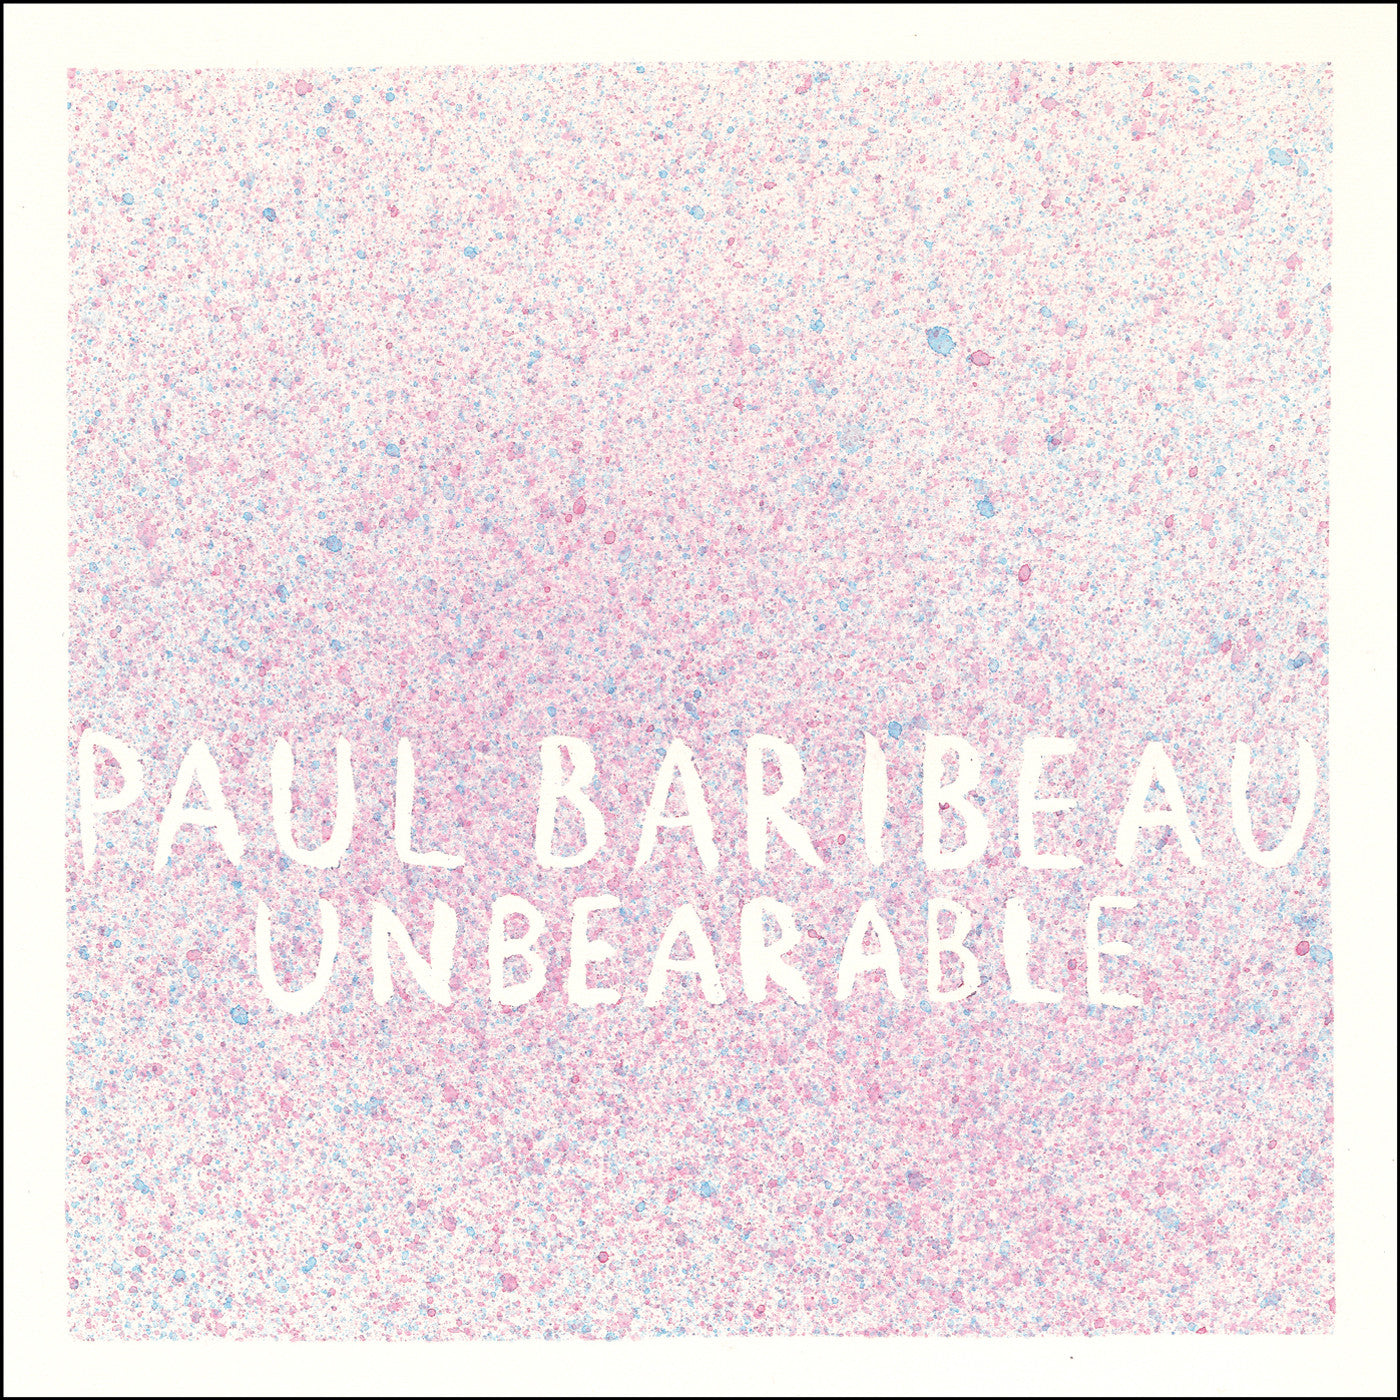 PAUL BARIBEAU "Unbearable"